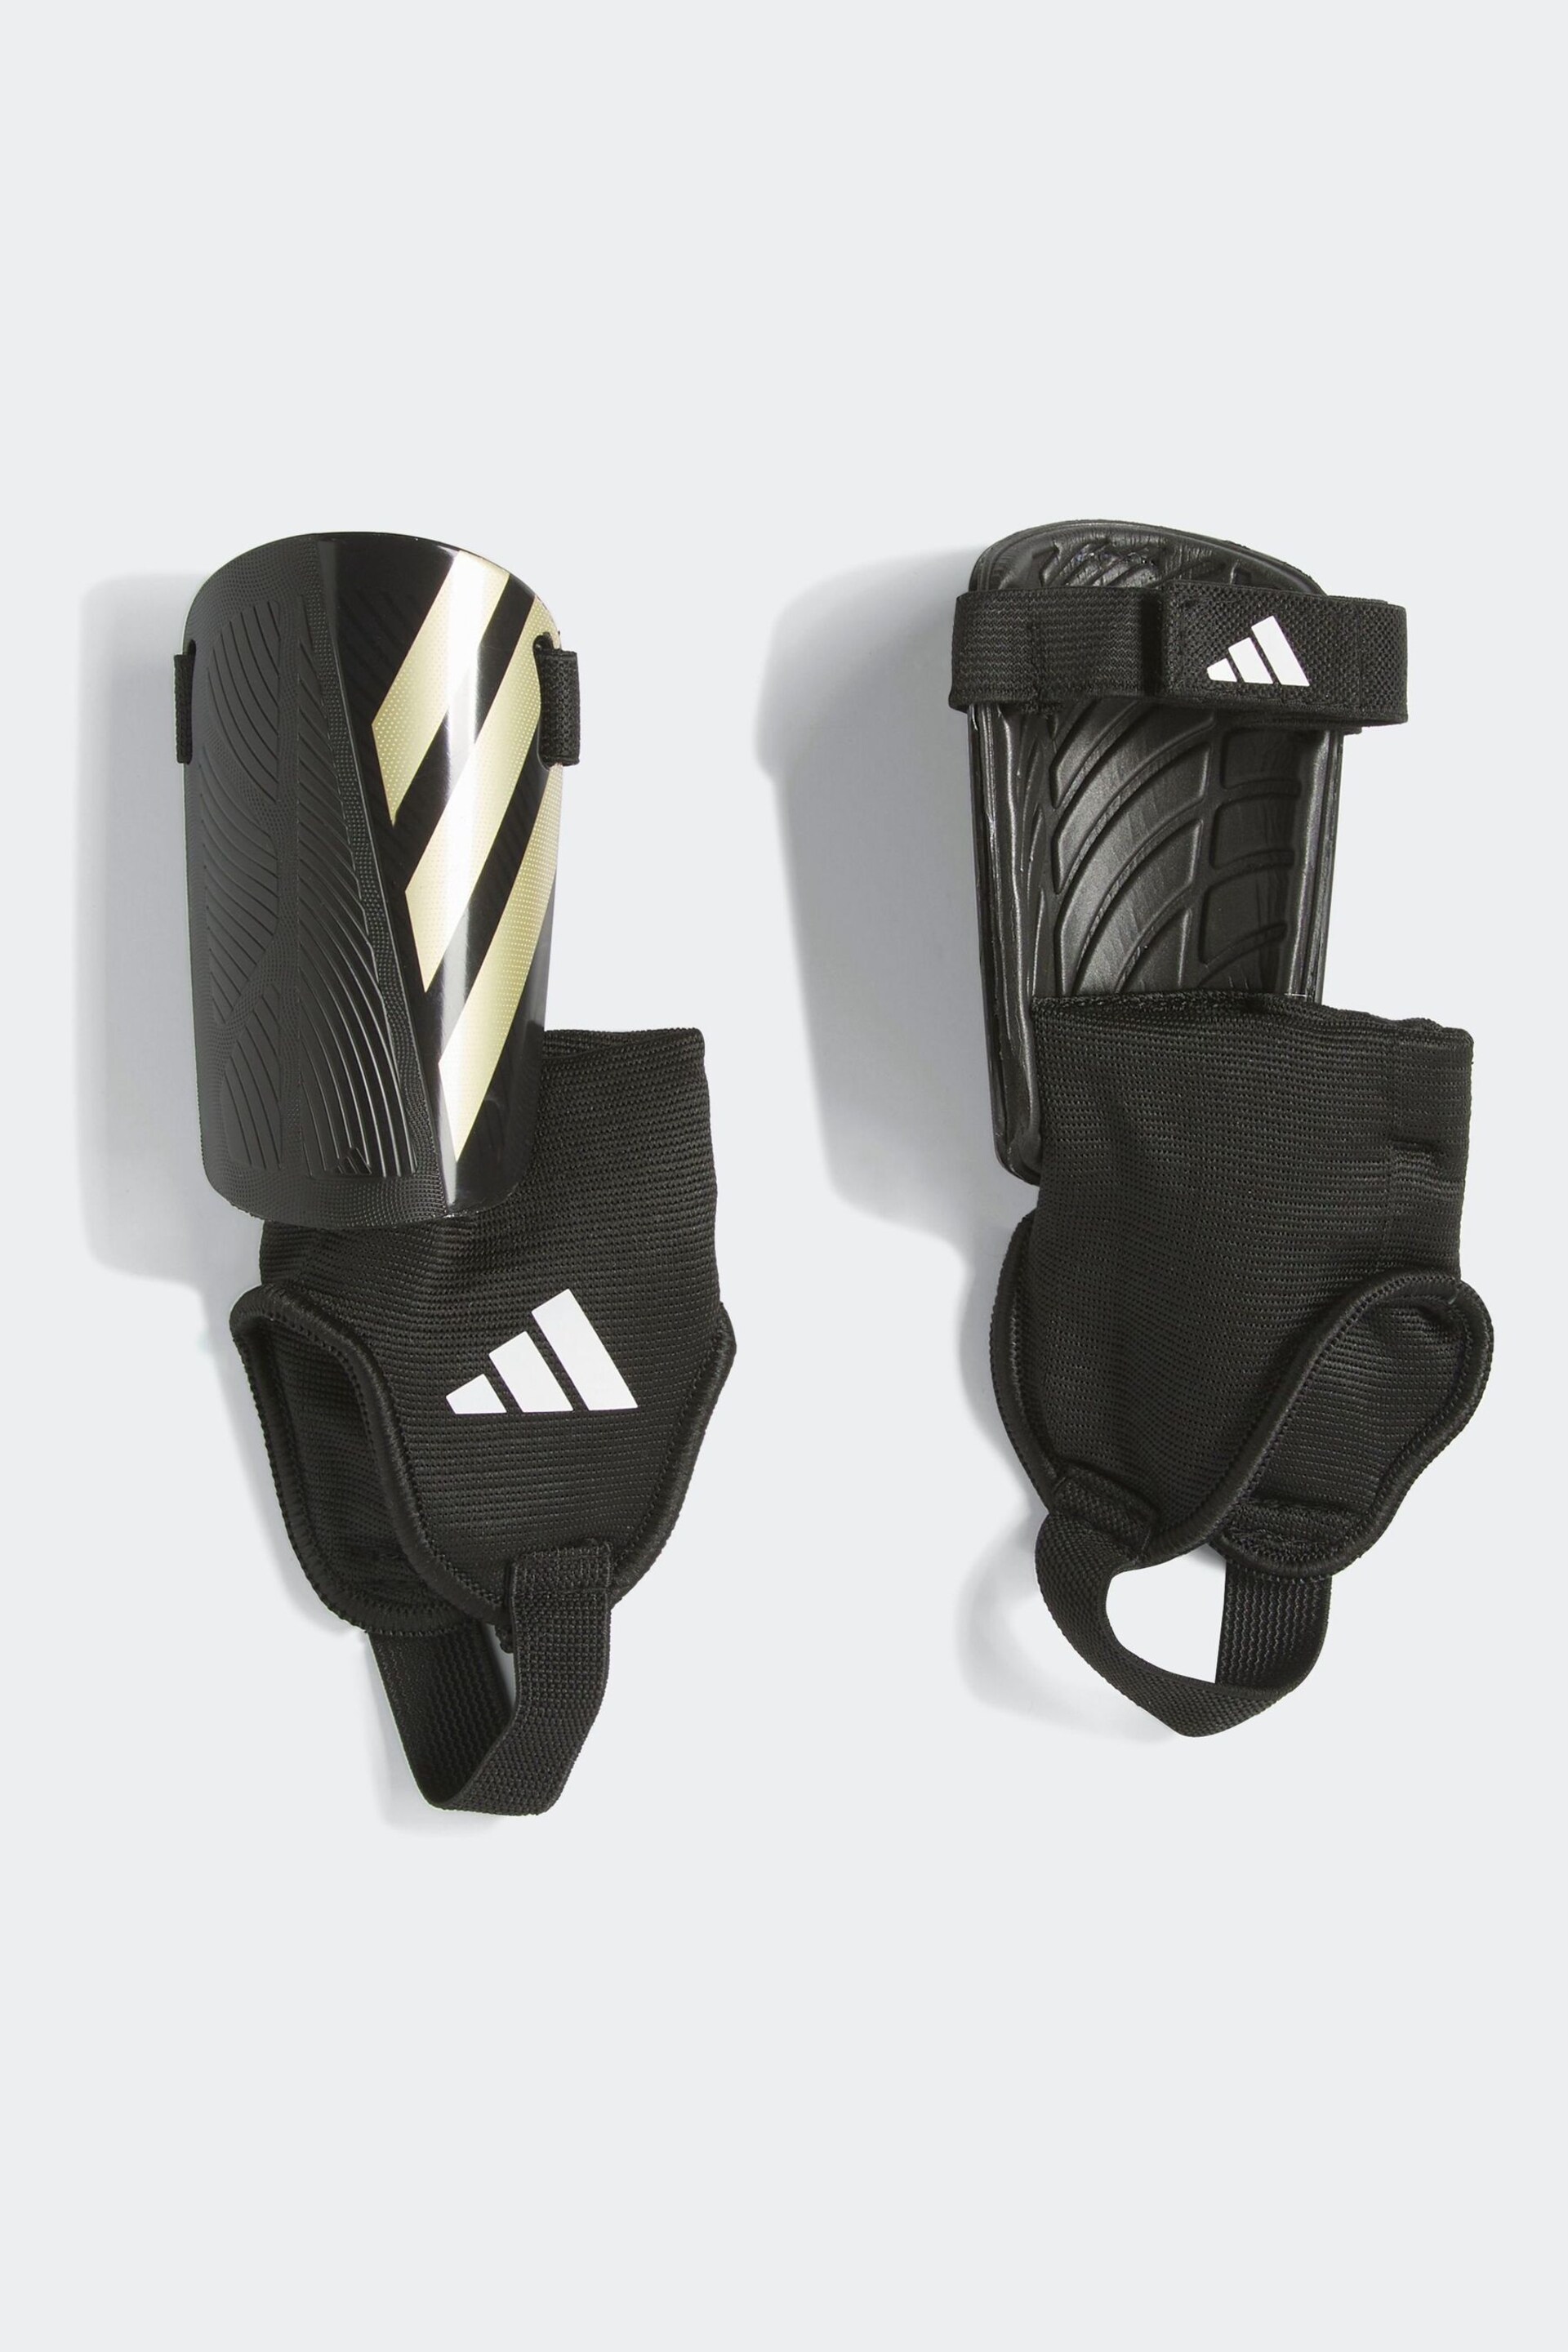 adidas Black/Gold Tiro Match Shin Guard - Image 2 of 4